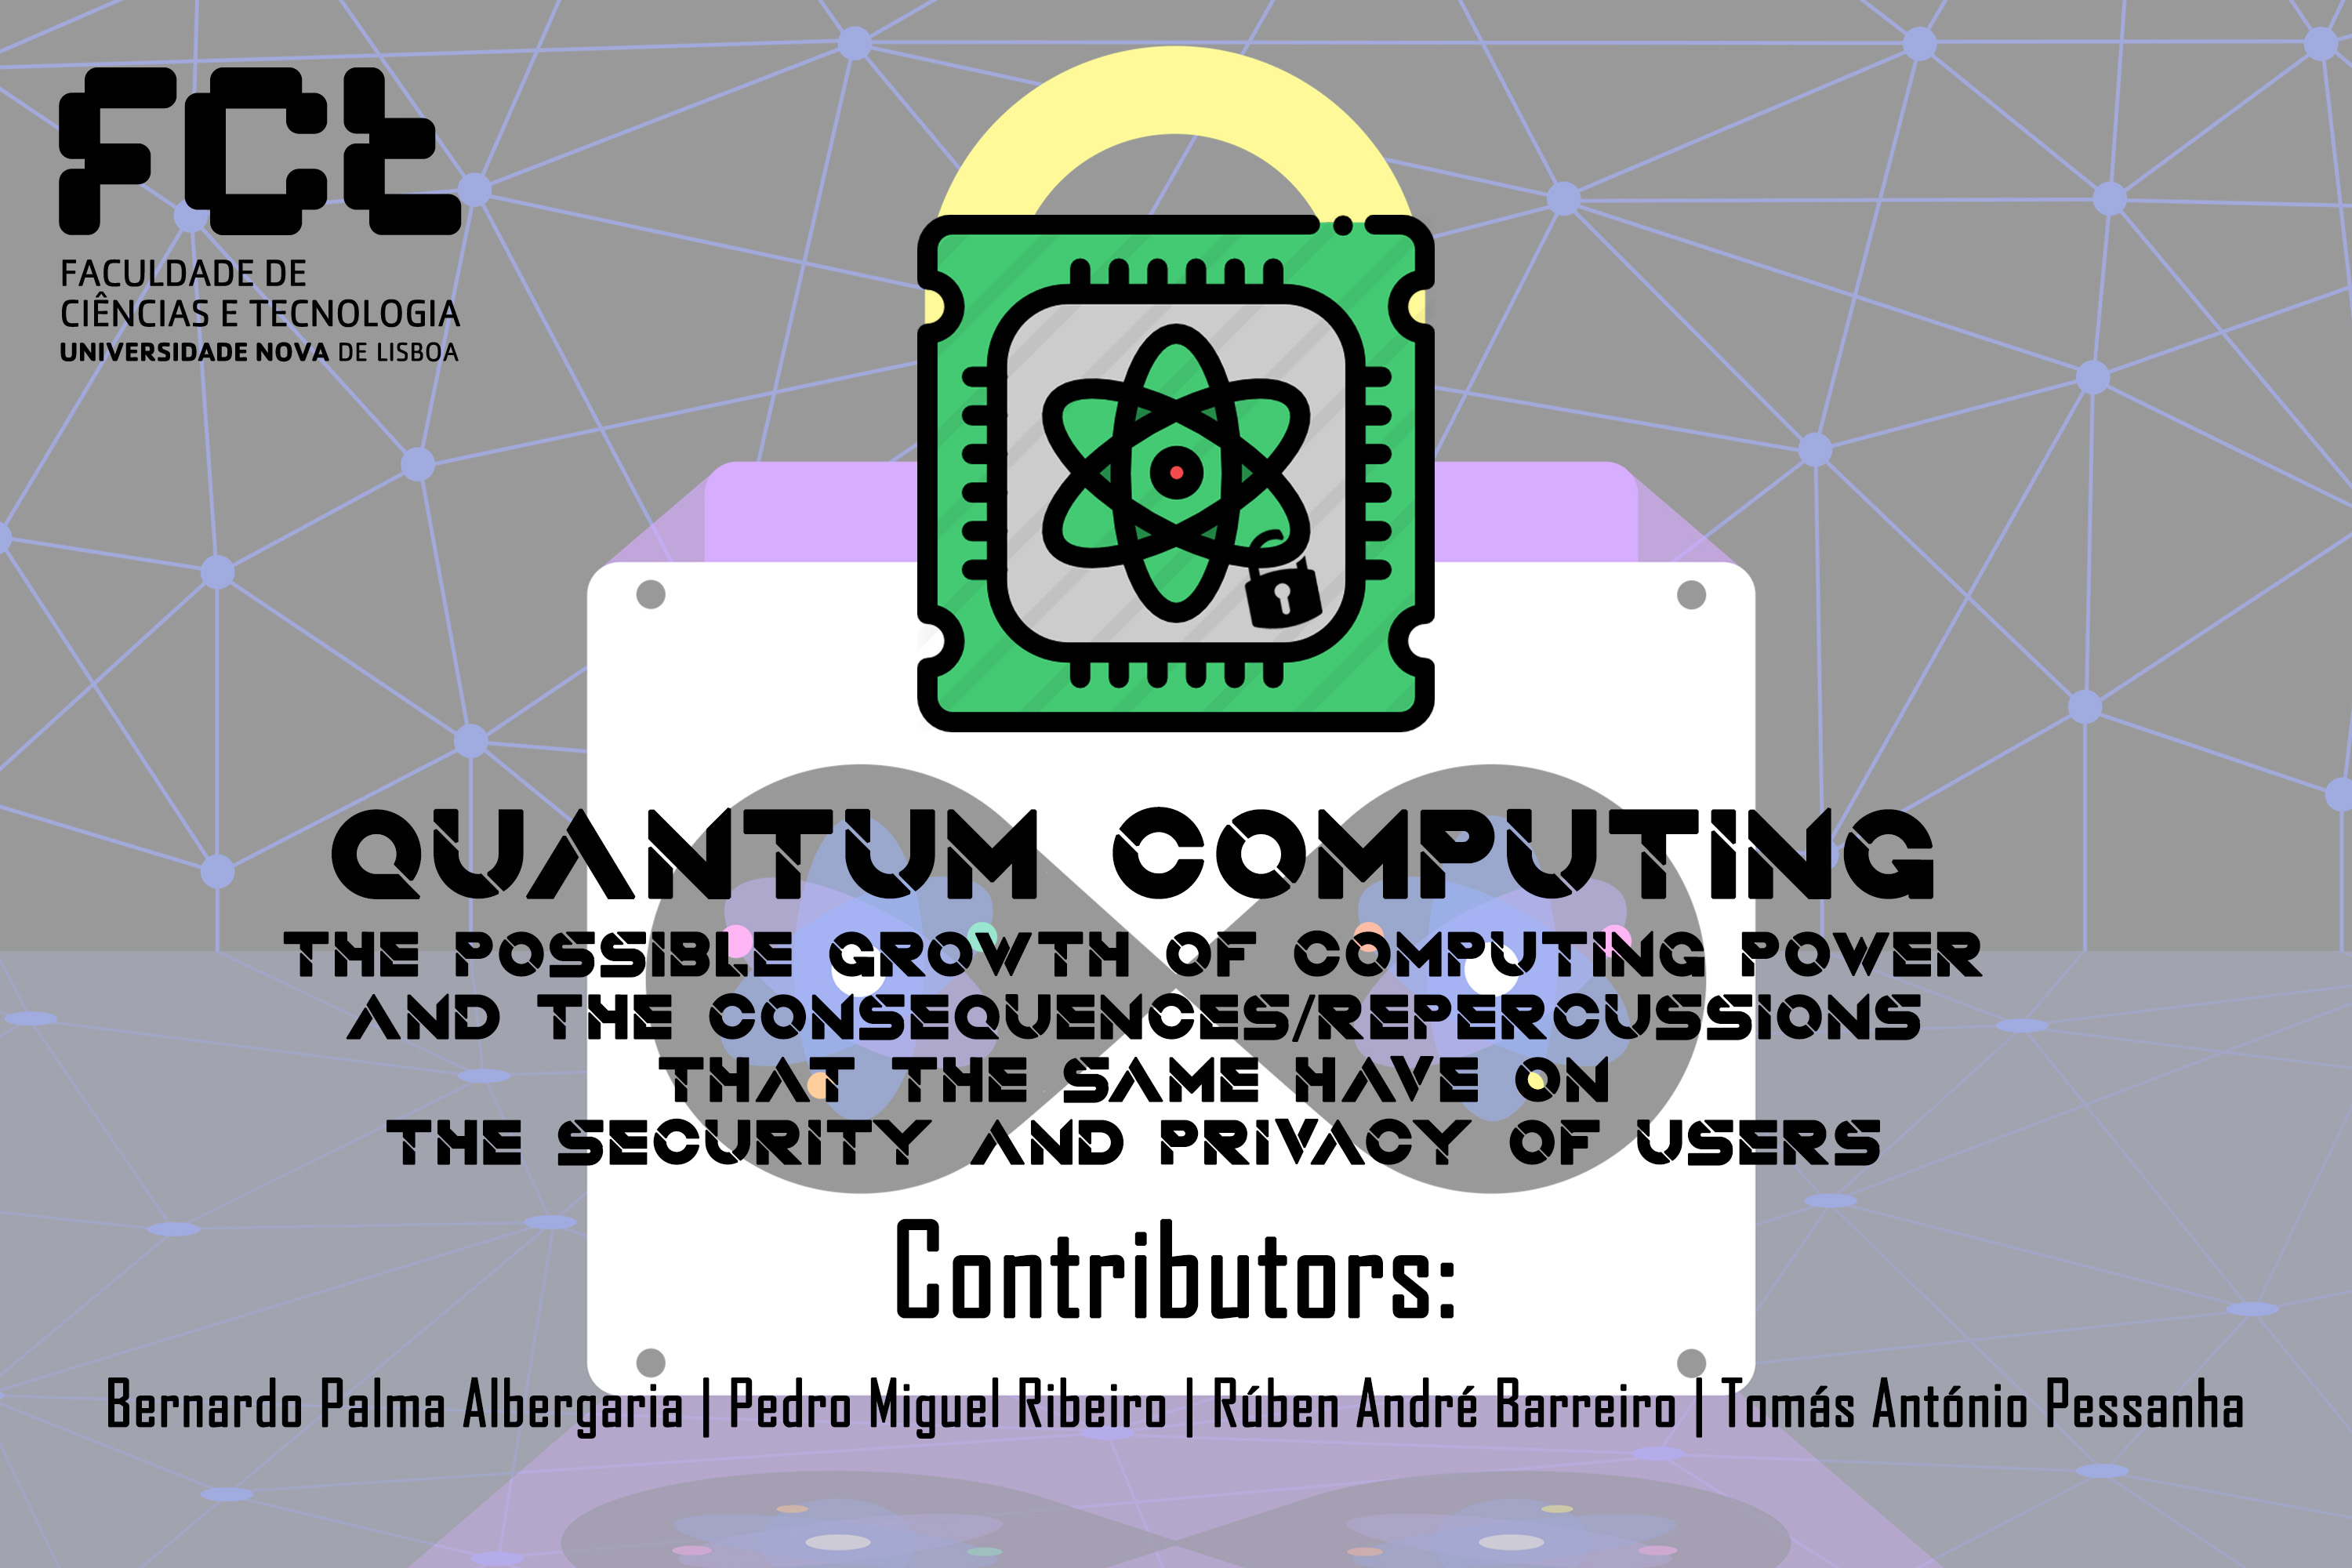 https://raw.githubusercontent.com/rubenandrebarreiro/quantum-computing-security-and-privacy-of-users/master/imgs/JPGs/banner-1.jpg